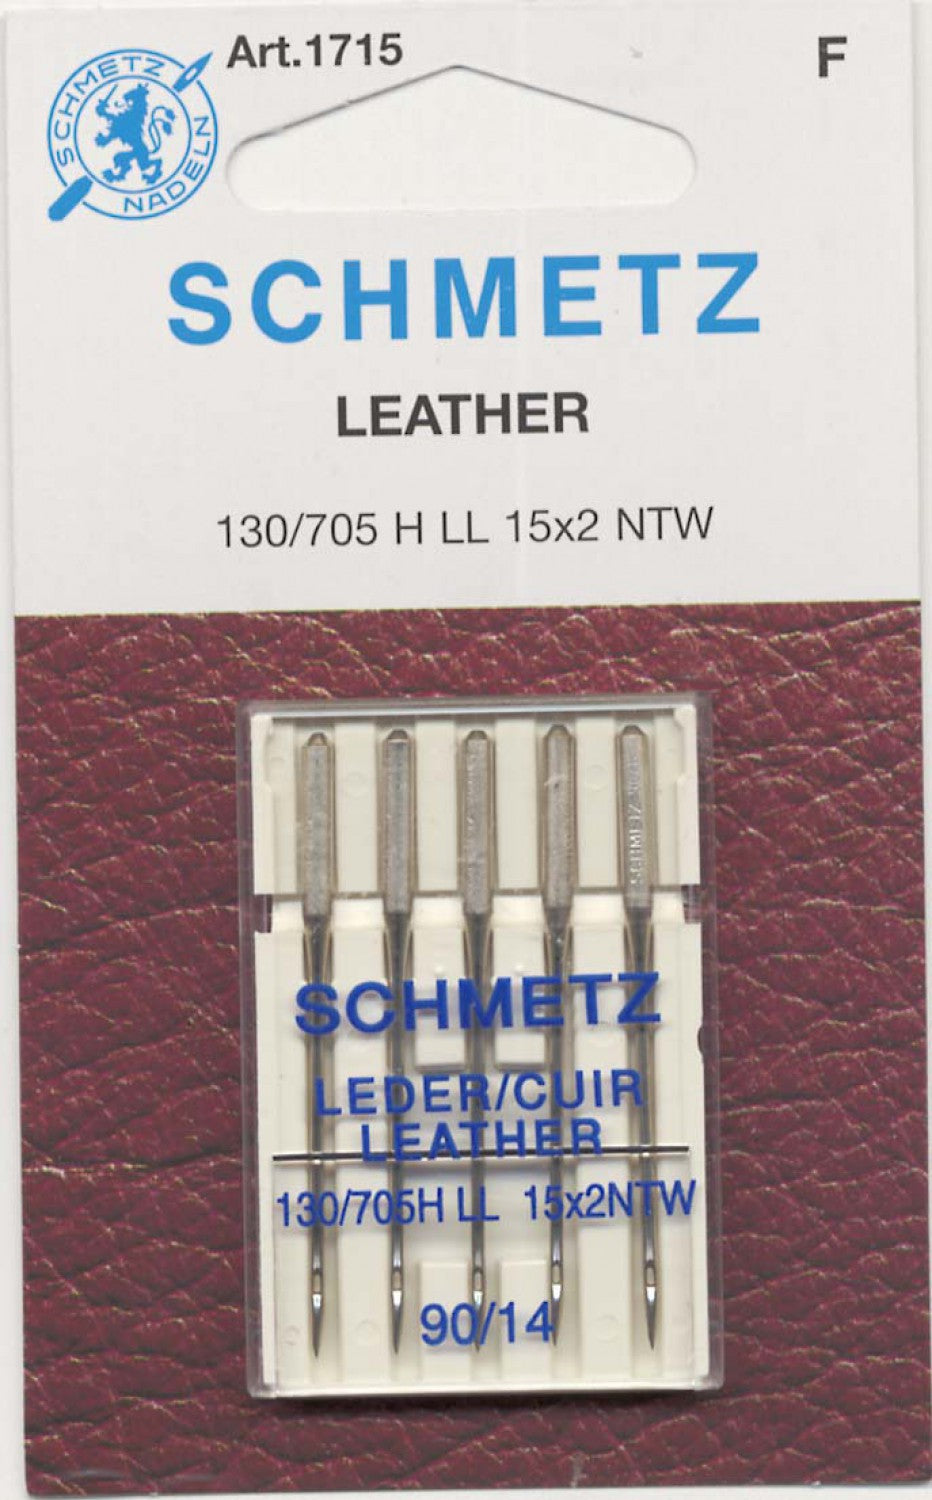 Schmetz Leather Needle - 90/14 - 1 Package of 5 Needles